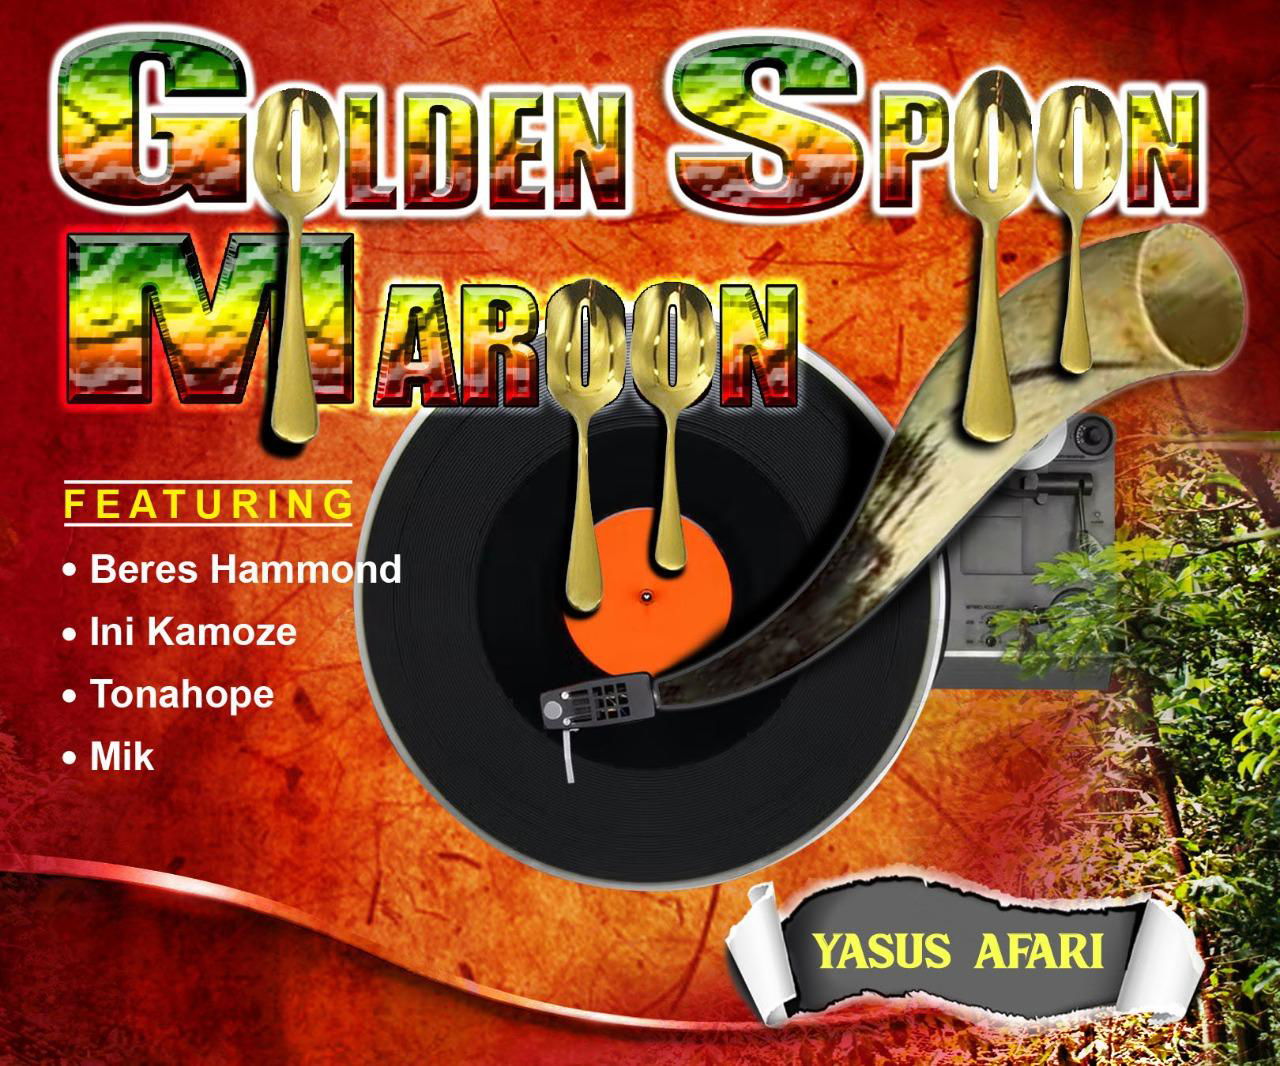 Yasus Afari - Golden Spoon Maroon - Harmonizing Roots Reggae, Poetree and Dub